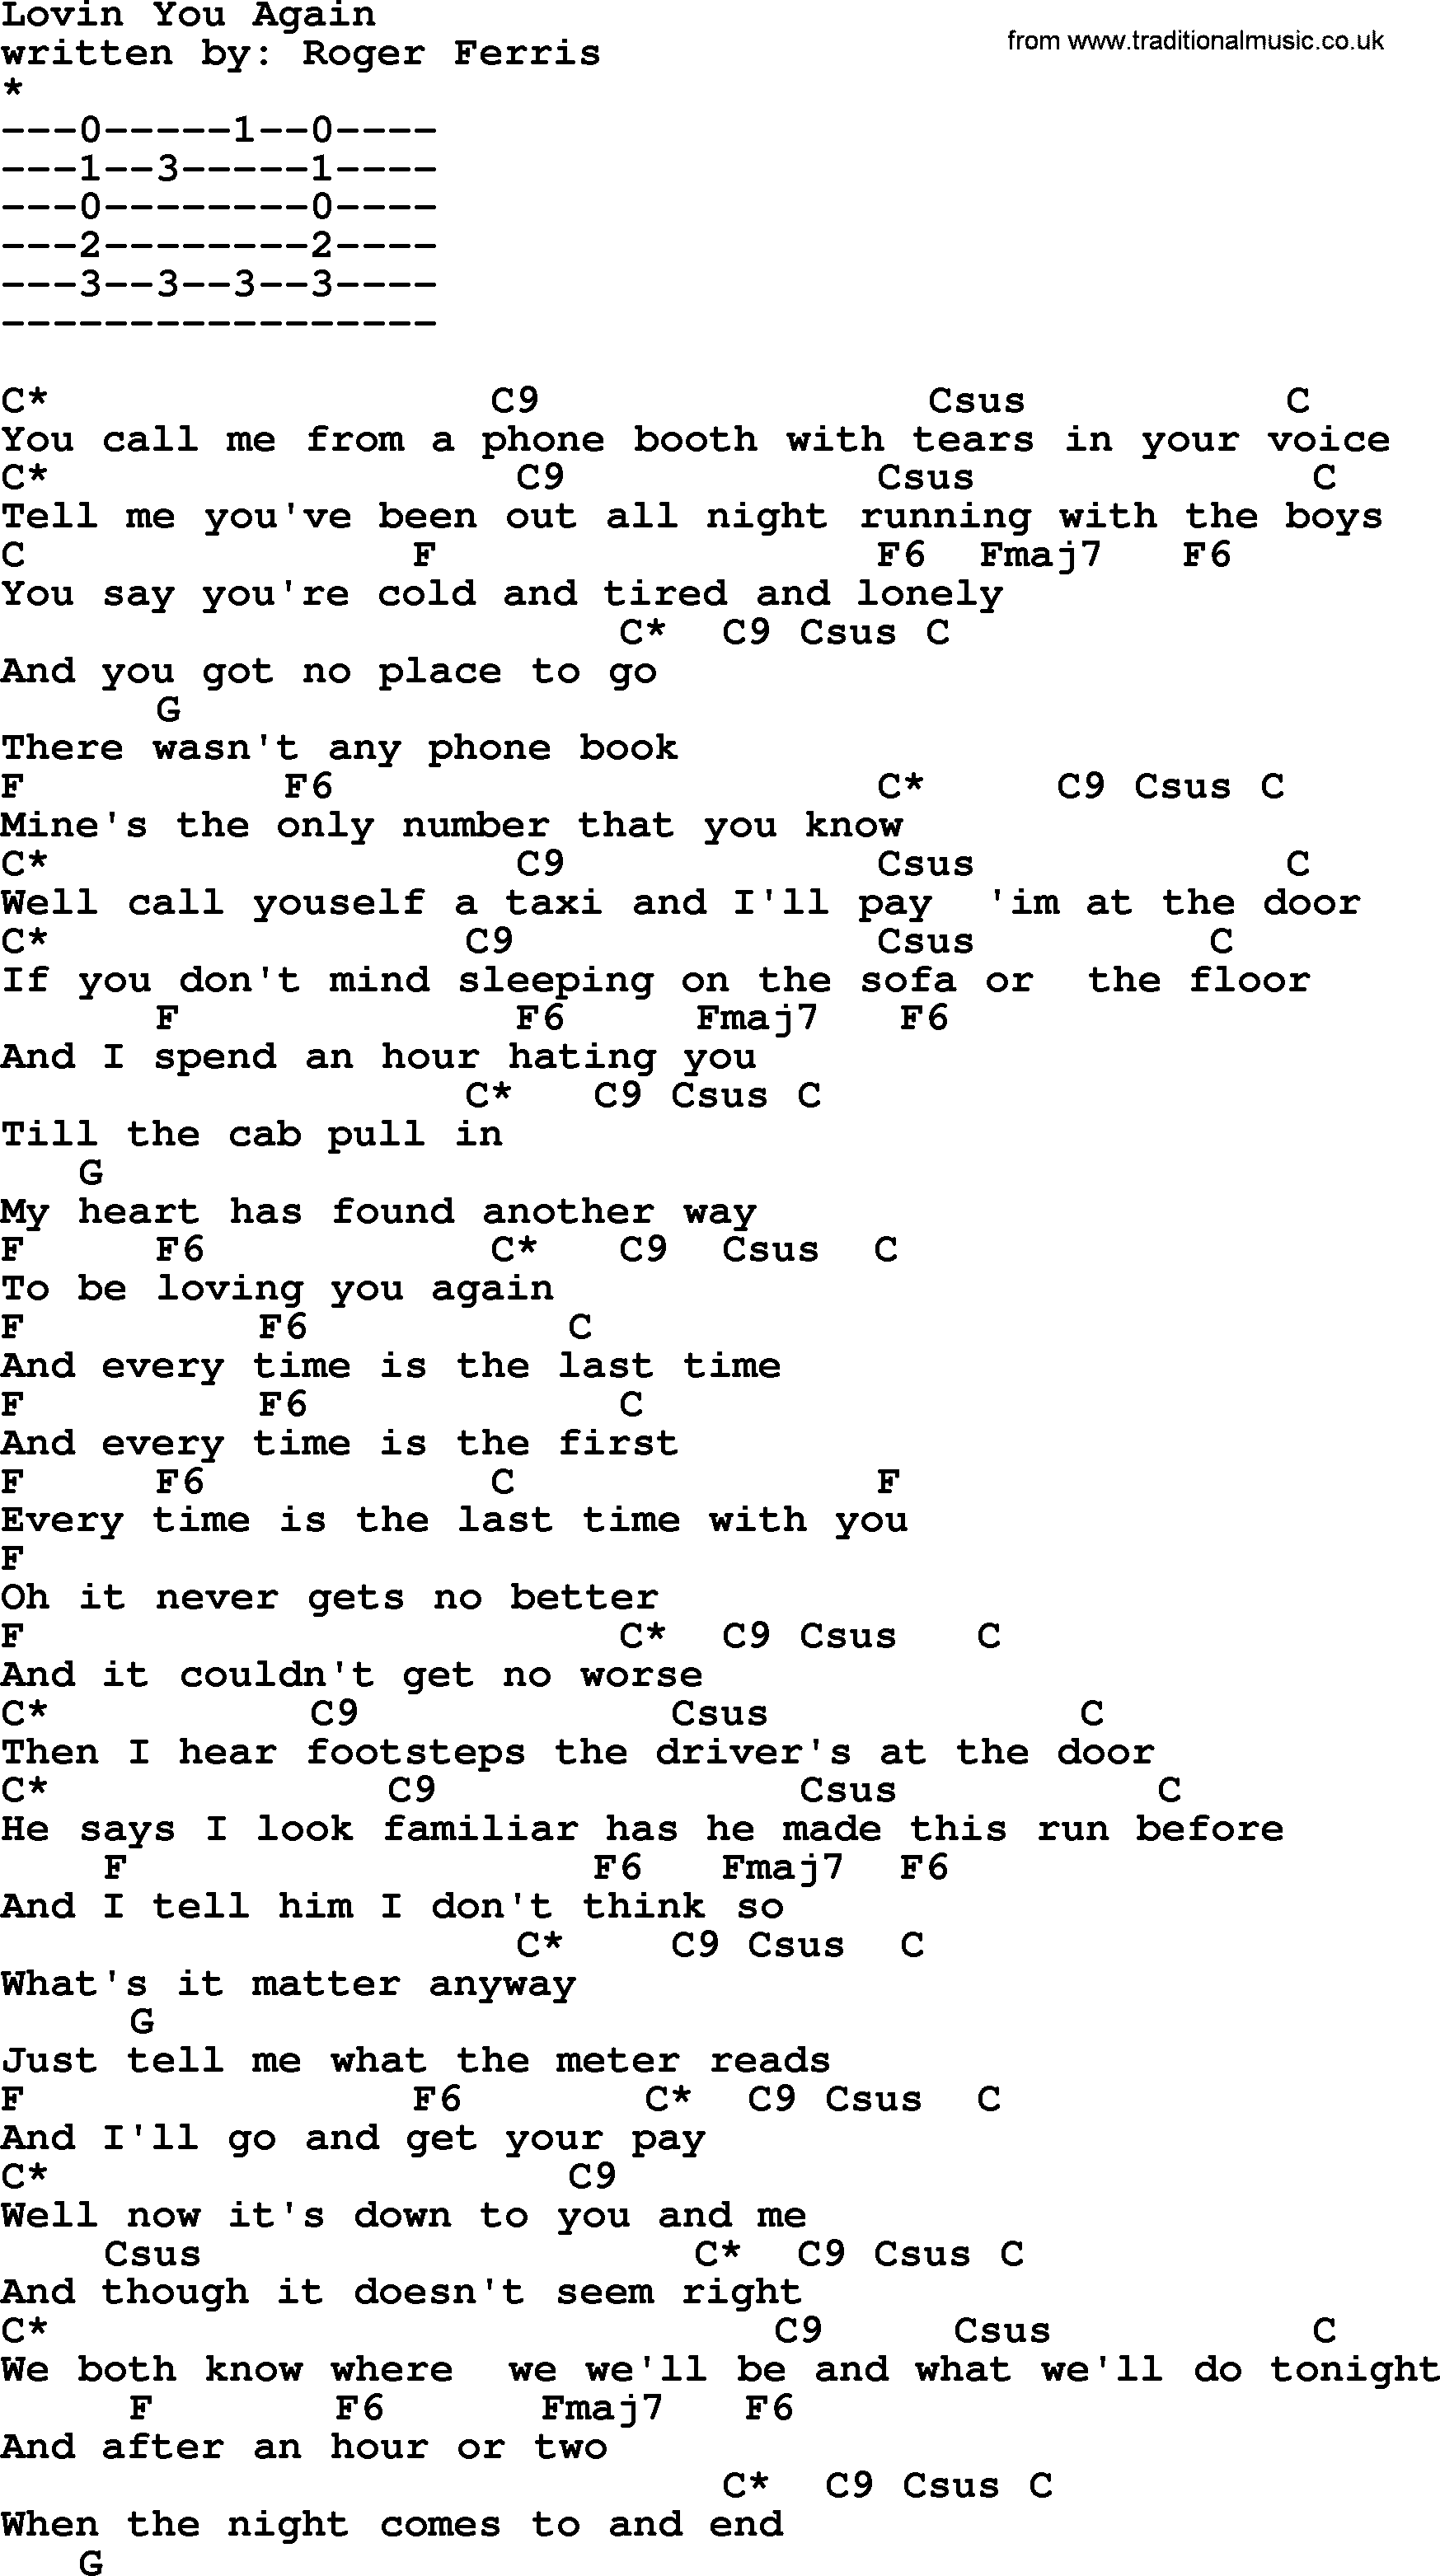 Emmylou Harris song: Lovin You Again lyrics and chords